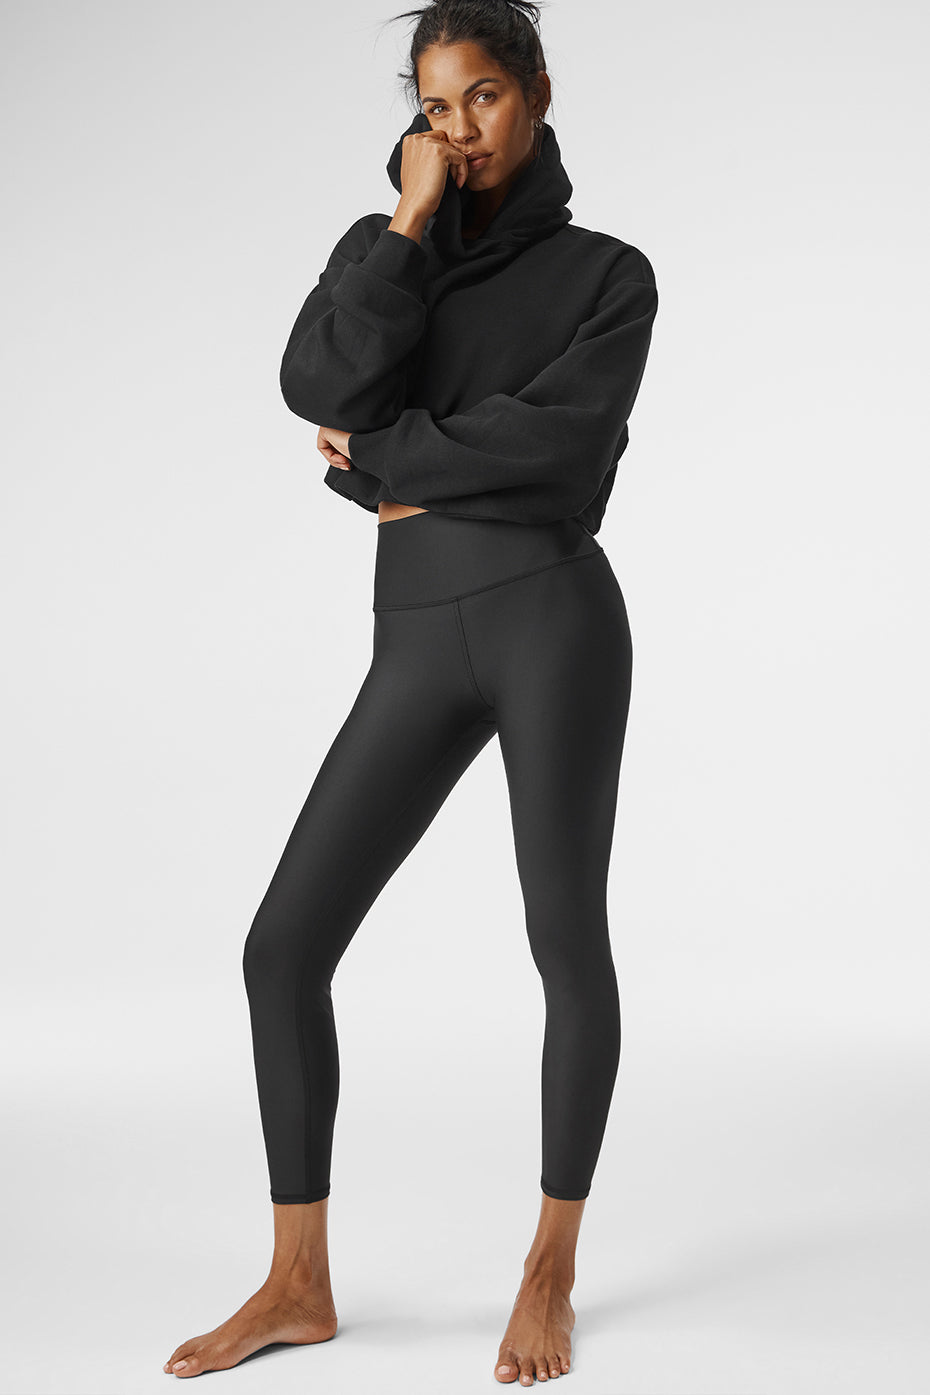 WOSHUAI Women's High Waist Faux Leather Shiny Black Capri Leggings  Reflective Liquid Metallic Shiny Wet Look Sexy Yoga Tights,S : :  Clothing, Shoes & Accessories